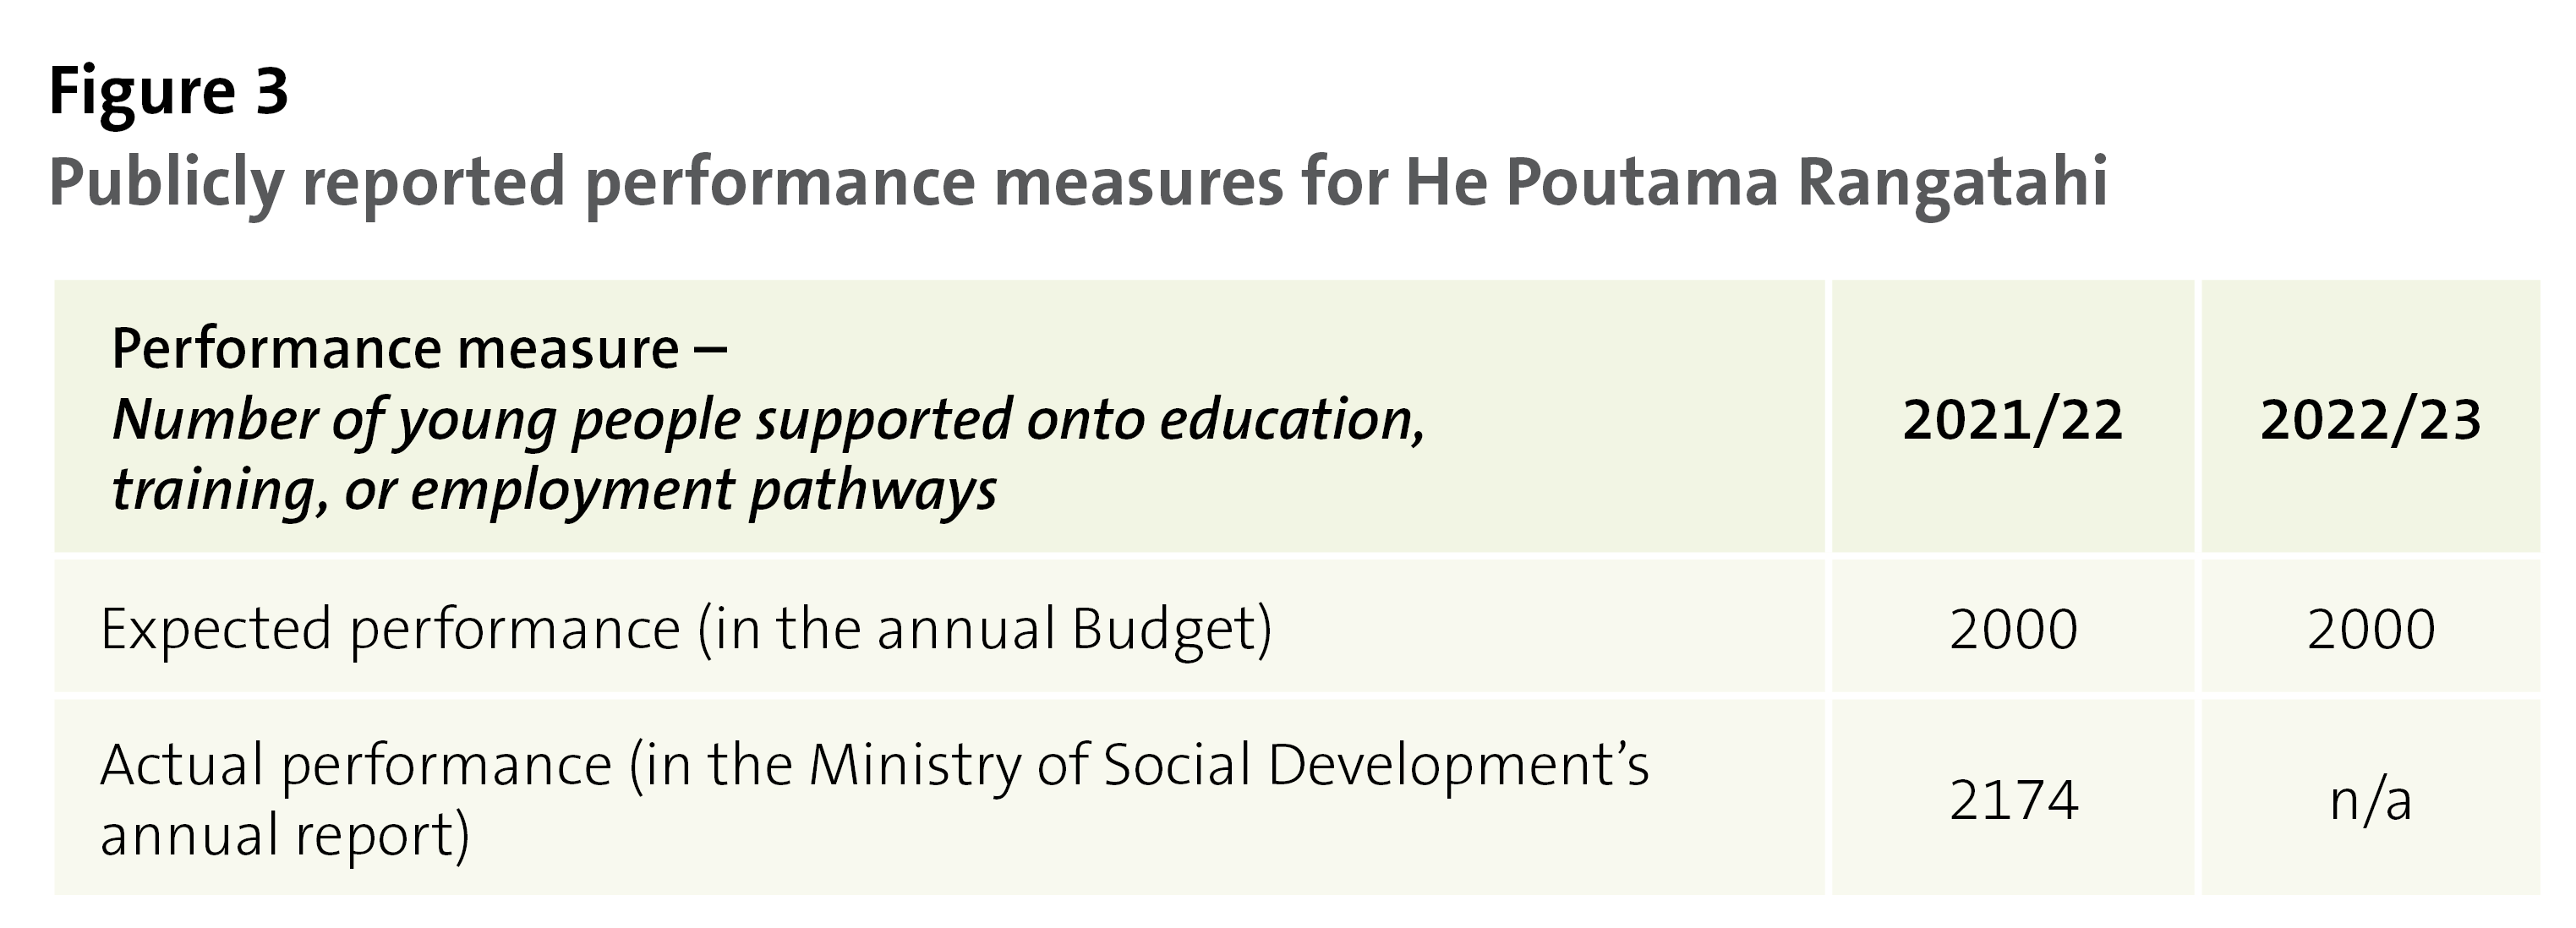 Figure 3 - Publicly reported performance measures for He Poutama Rangatahi